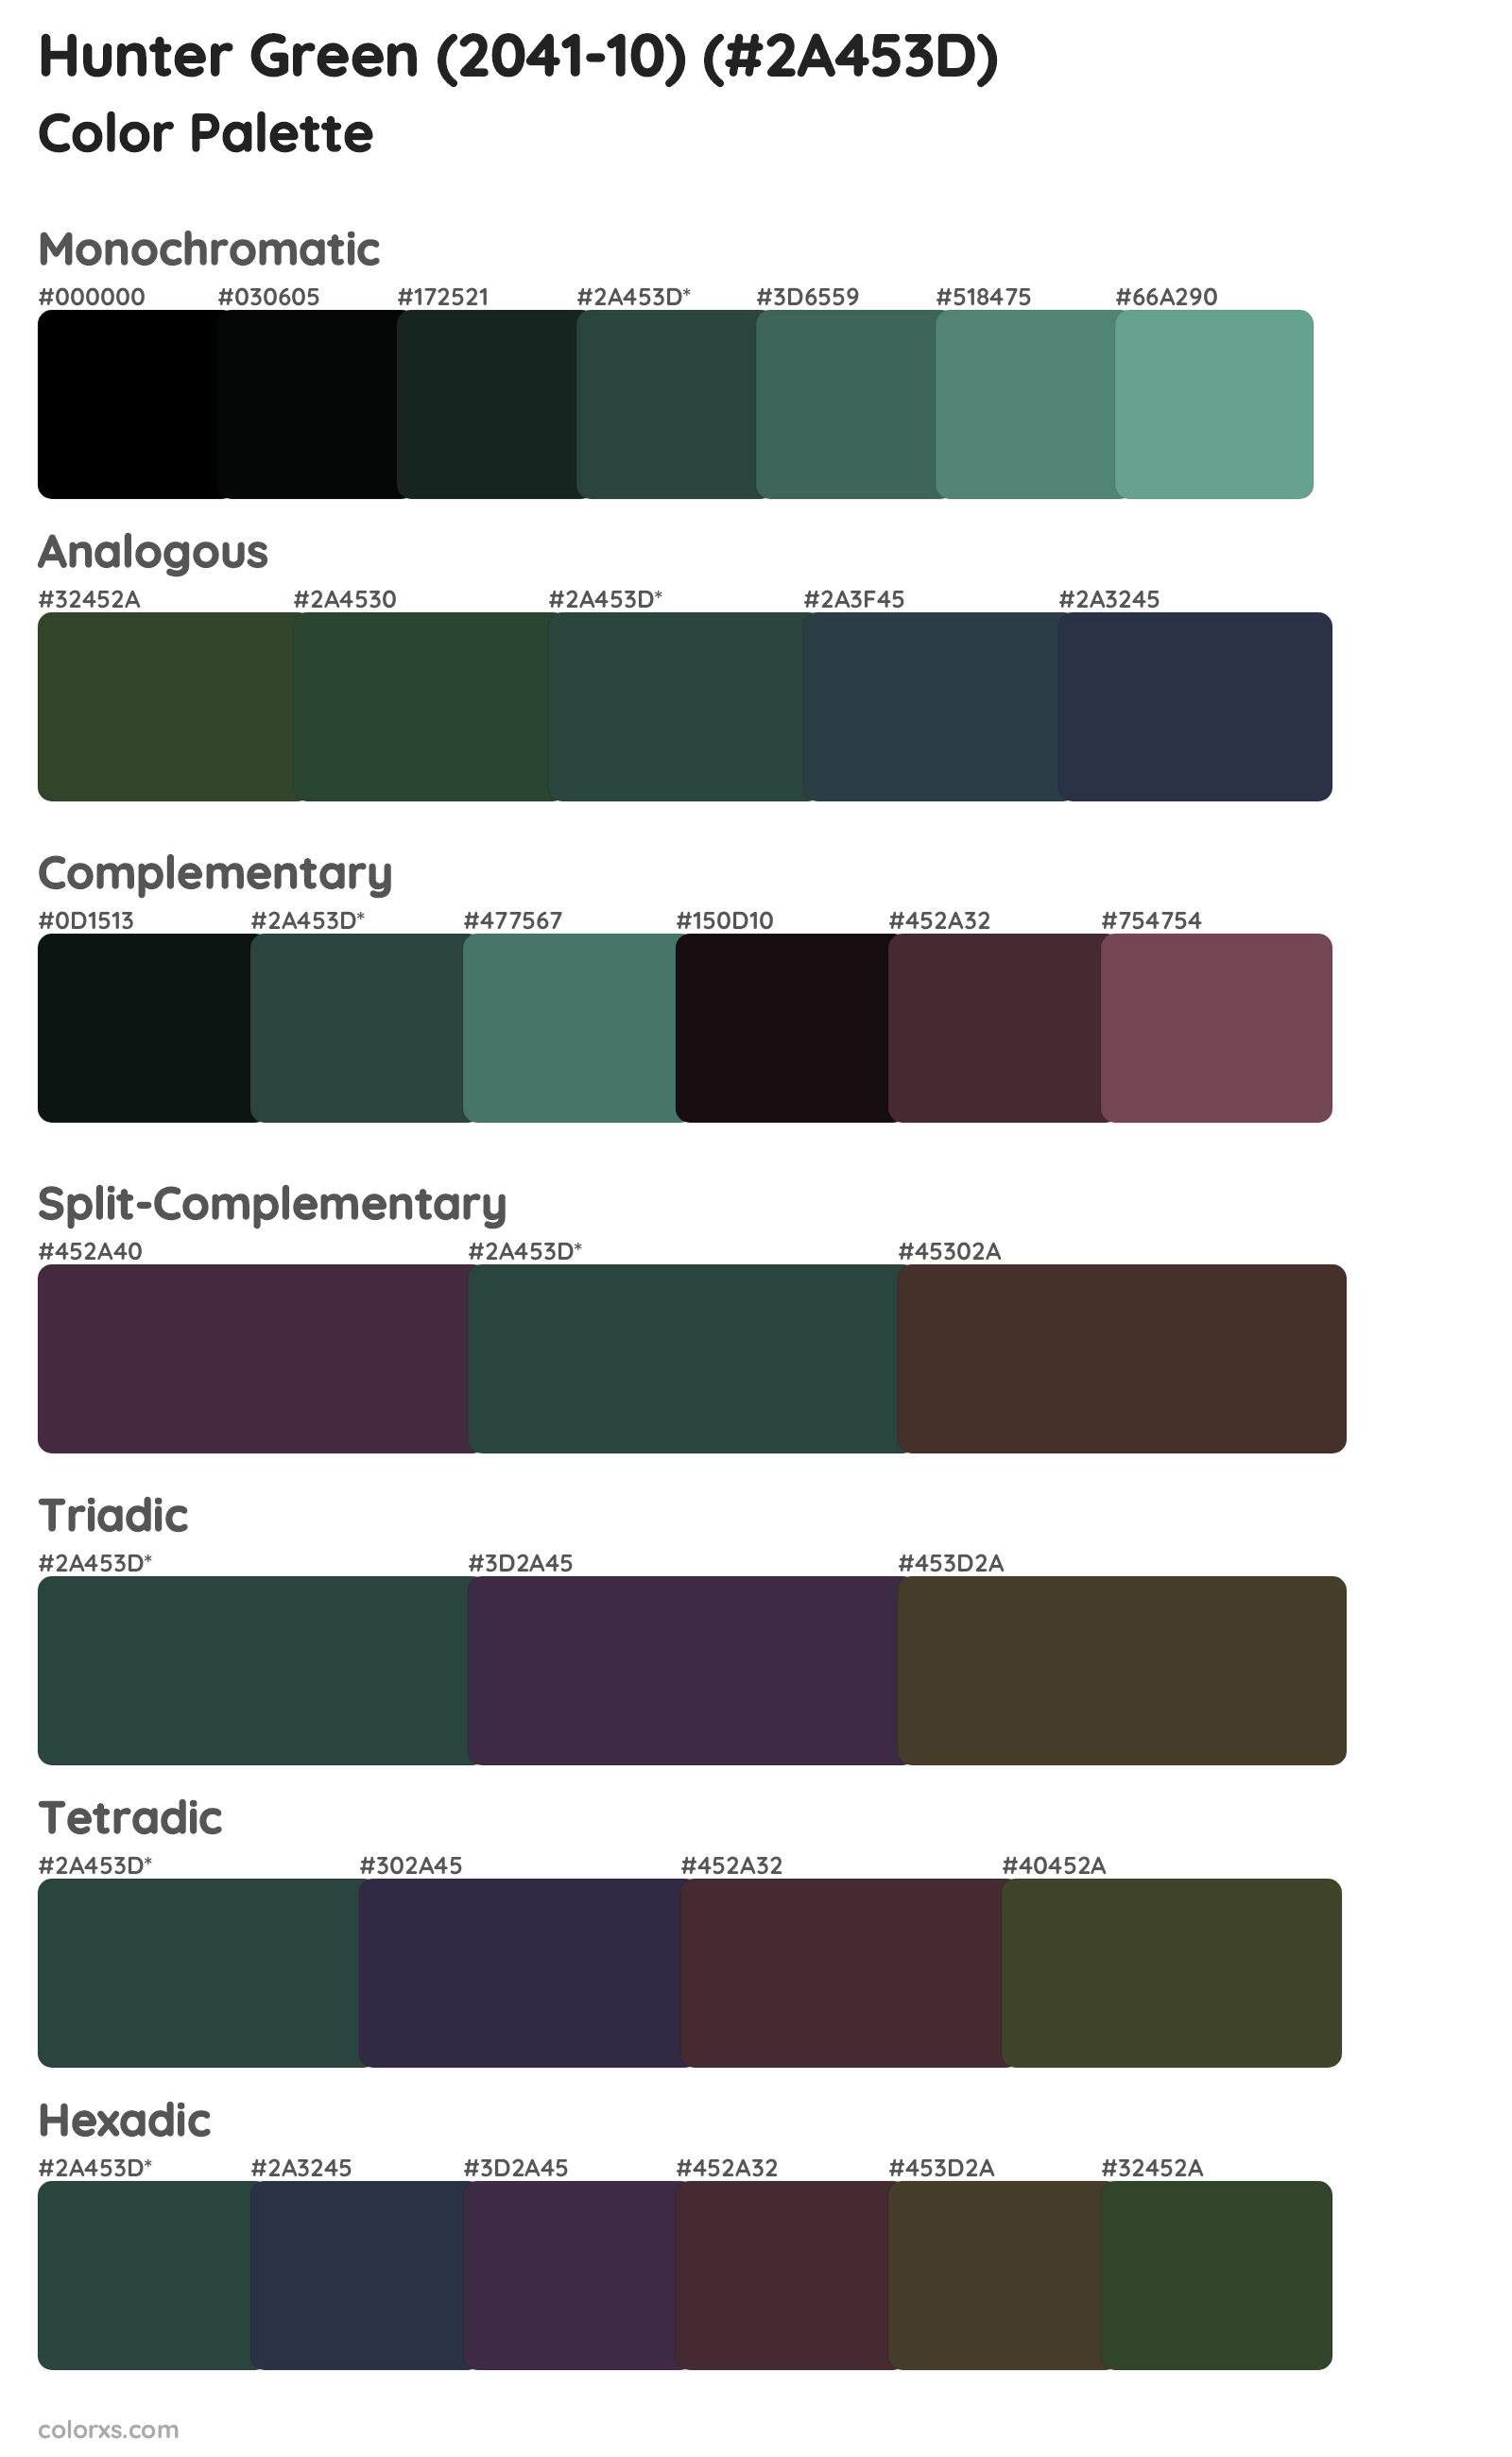 Hunter Green (2041-10) Color Scheme Palettes